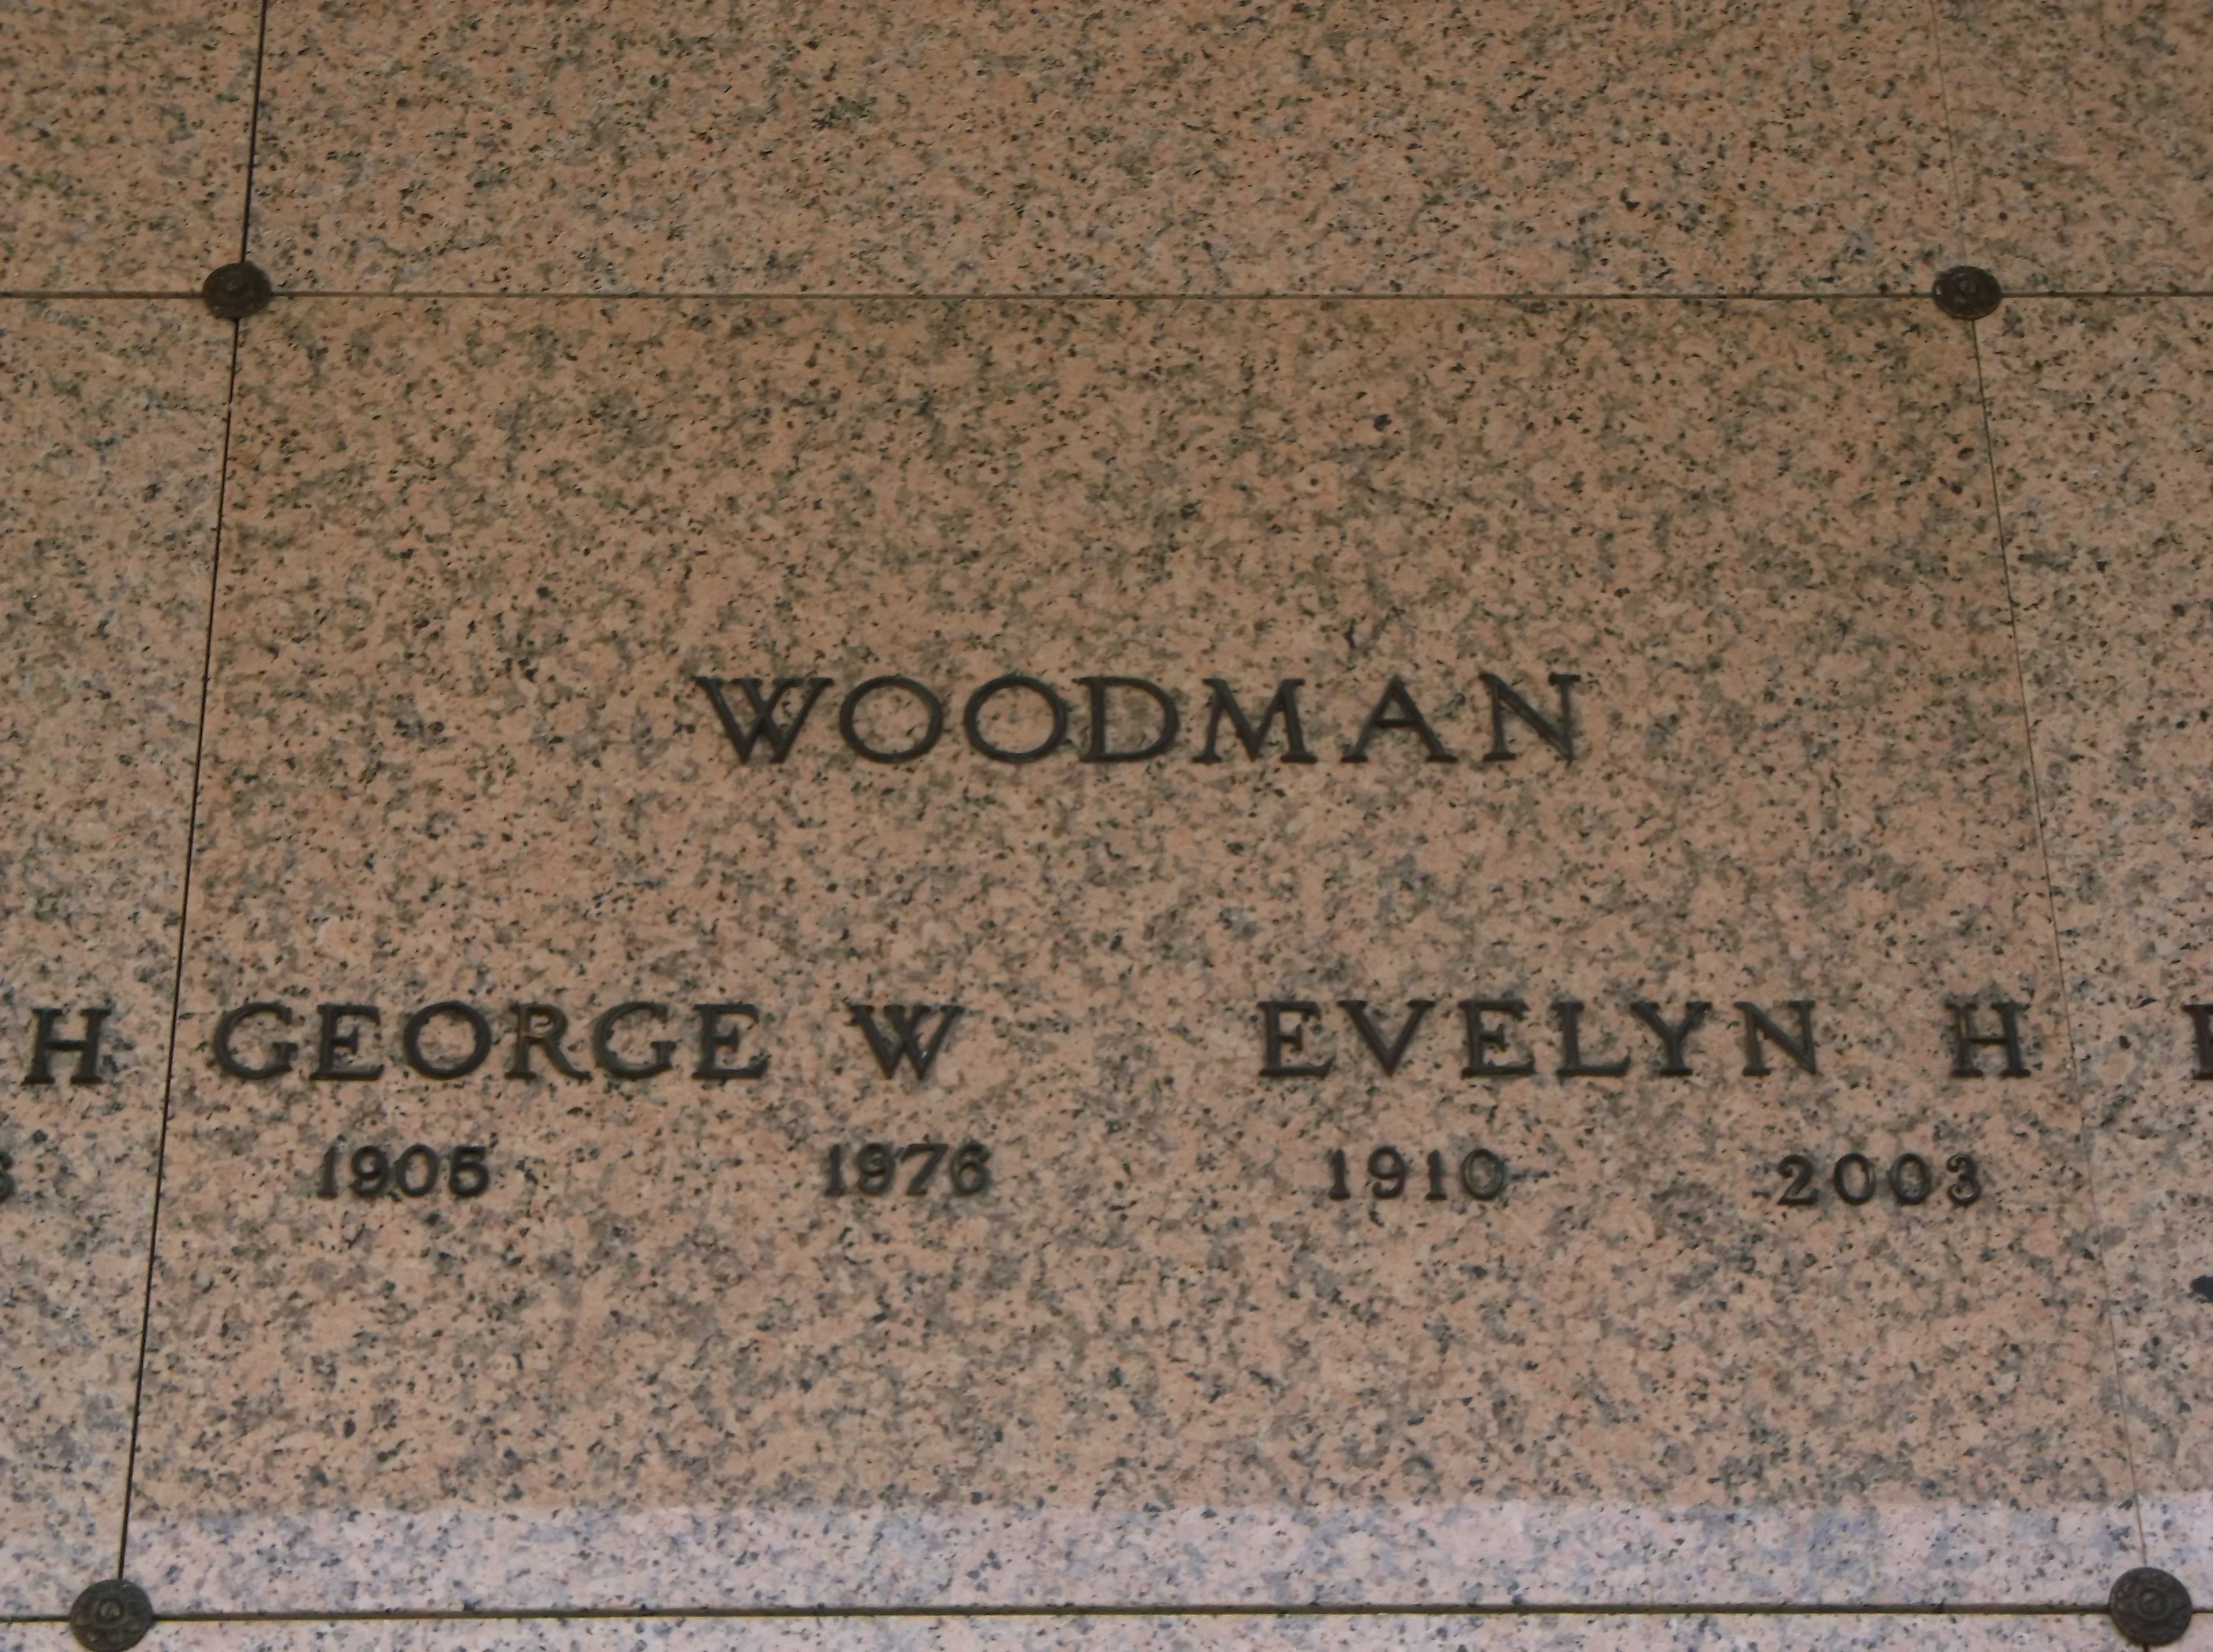 George W Woodman